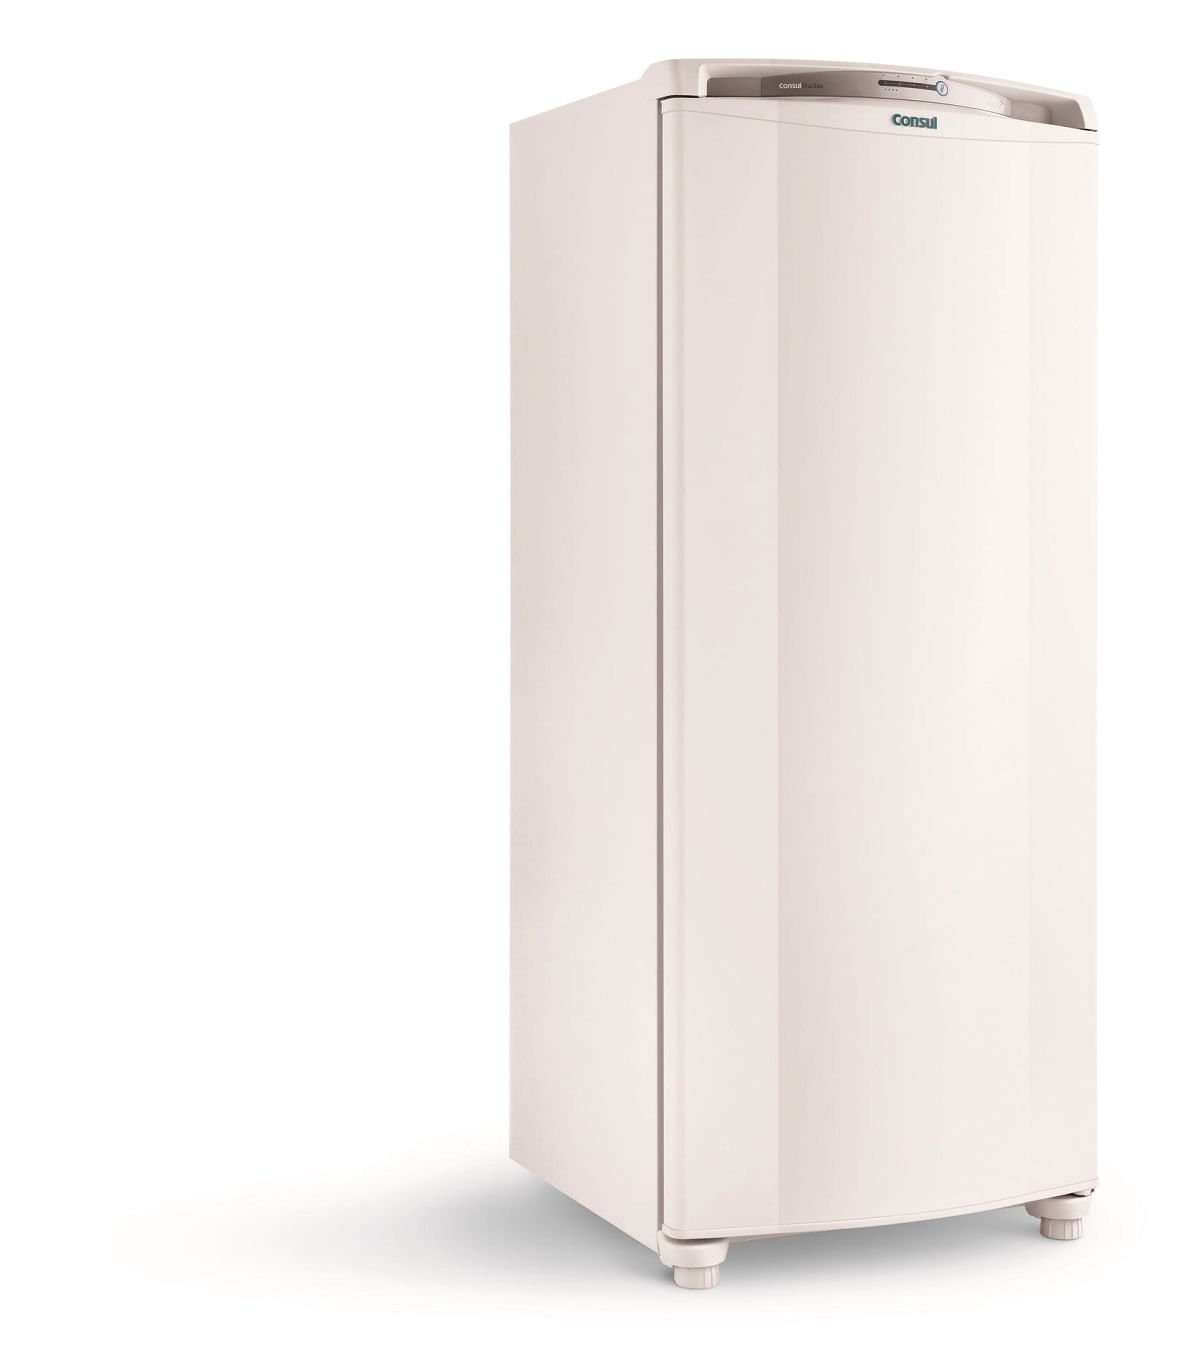 Refrigerador Consul Frost Free 300 Litros Crb36abbna Branco – 220 Volts - 1